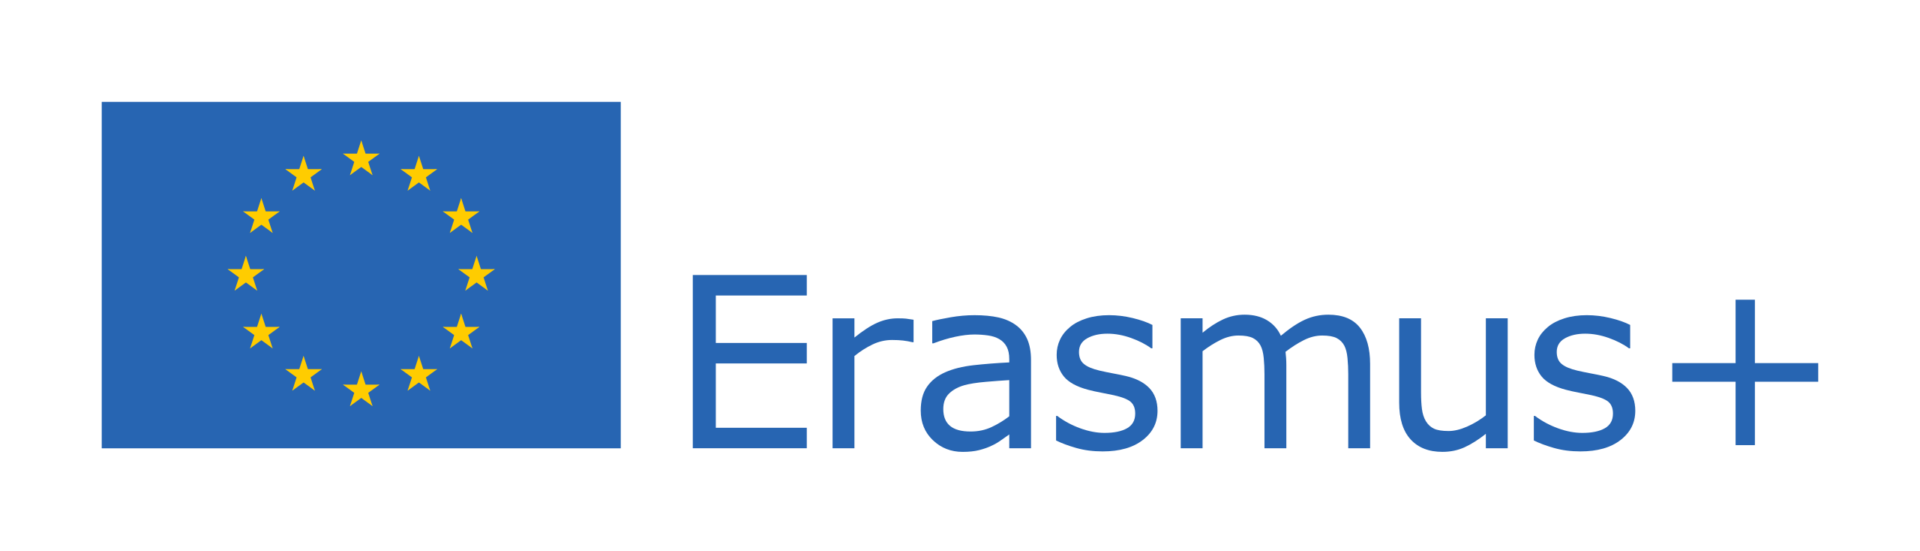 logo ERASMUS +: po lewej flaga unii europejskiej, po prawej napis ERASMUS +